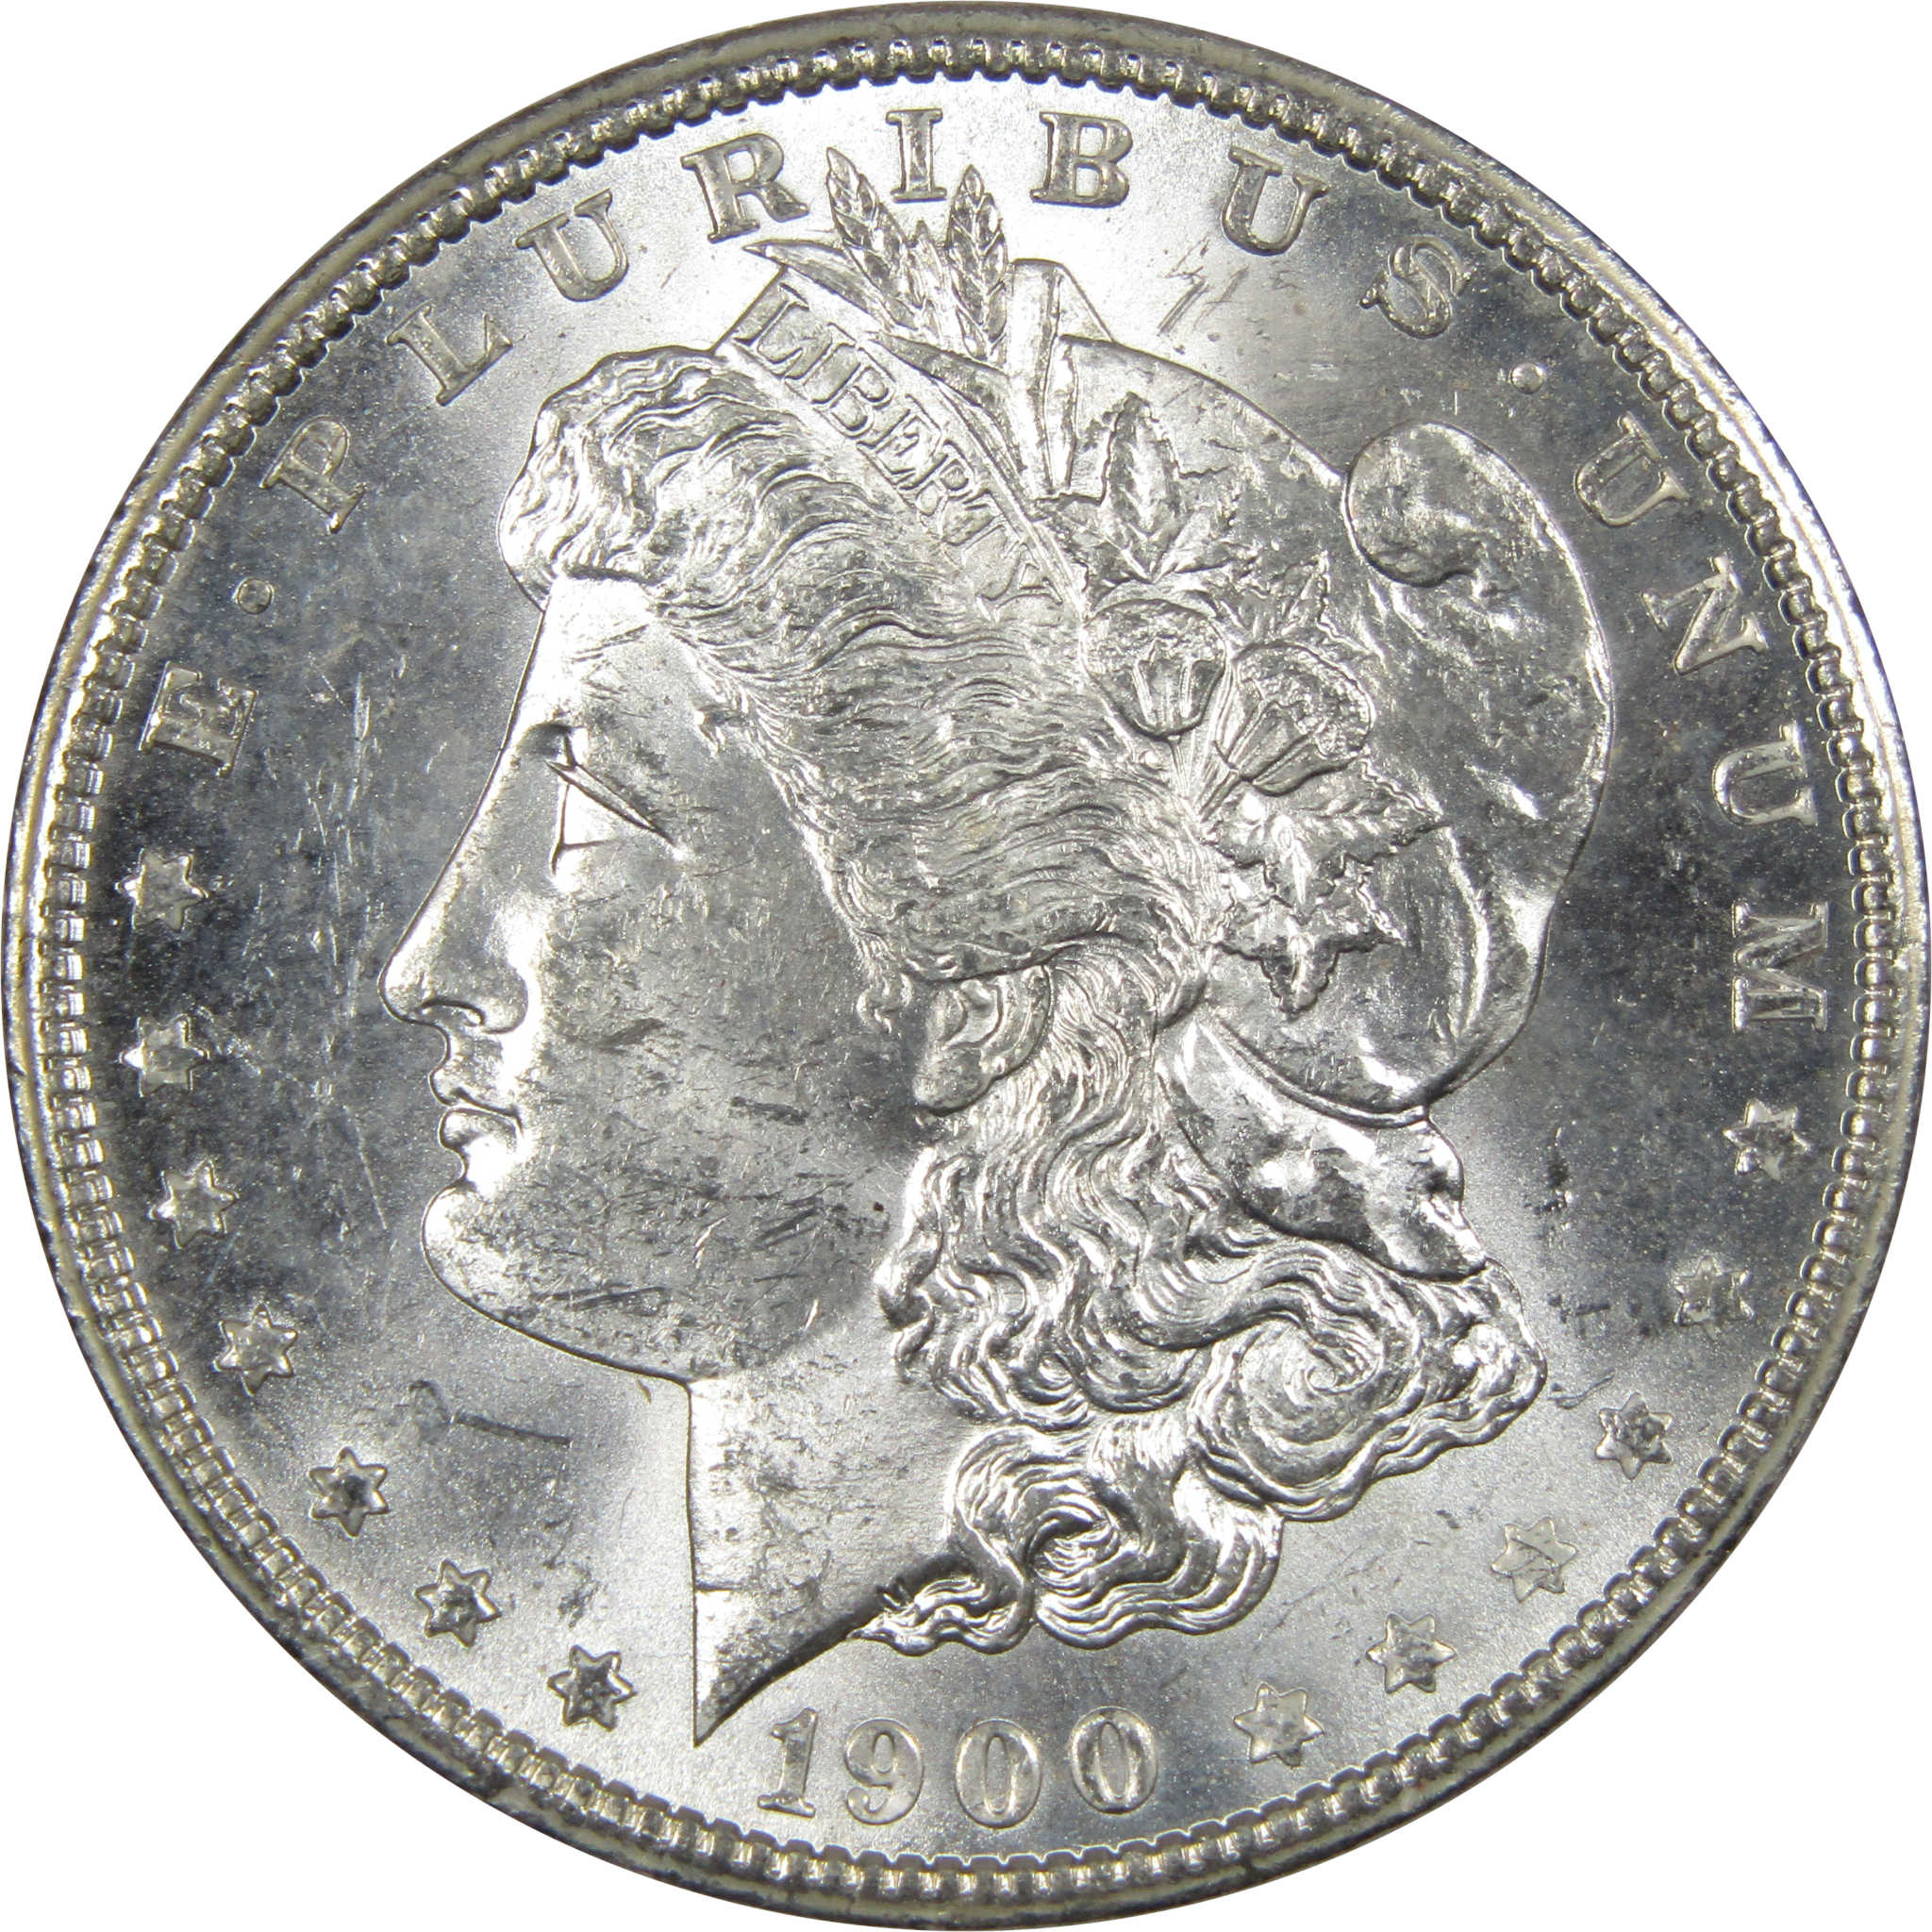 1900 O Morgan Dollar BU Uncirculated Mint State 90% Silver SKU:IPC9783 - Morgan coin - Morgan silver dollar - Morgan silver dollar for sale - Profile Coins &amp; Collectibles